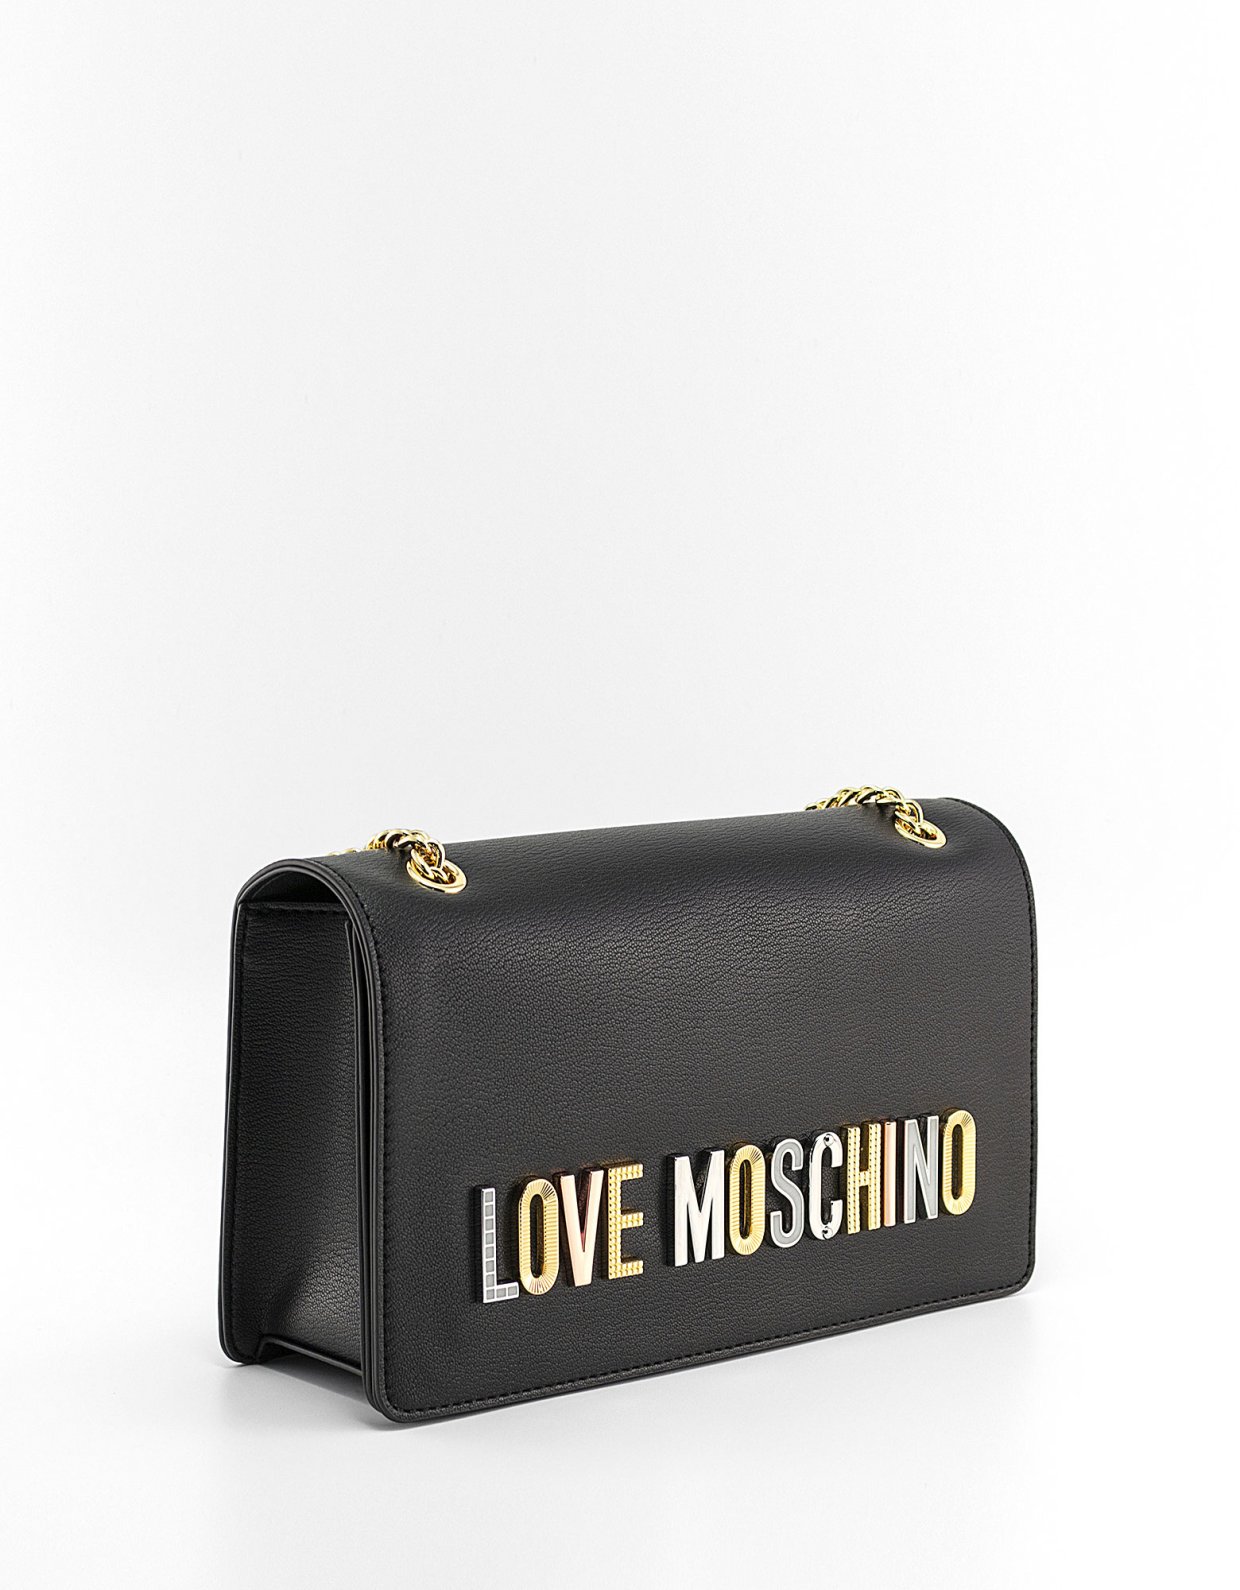 Love Moschino Colorful logo shoulder bag black